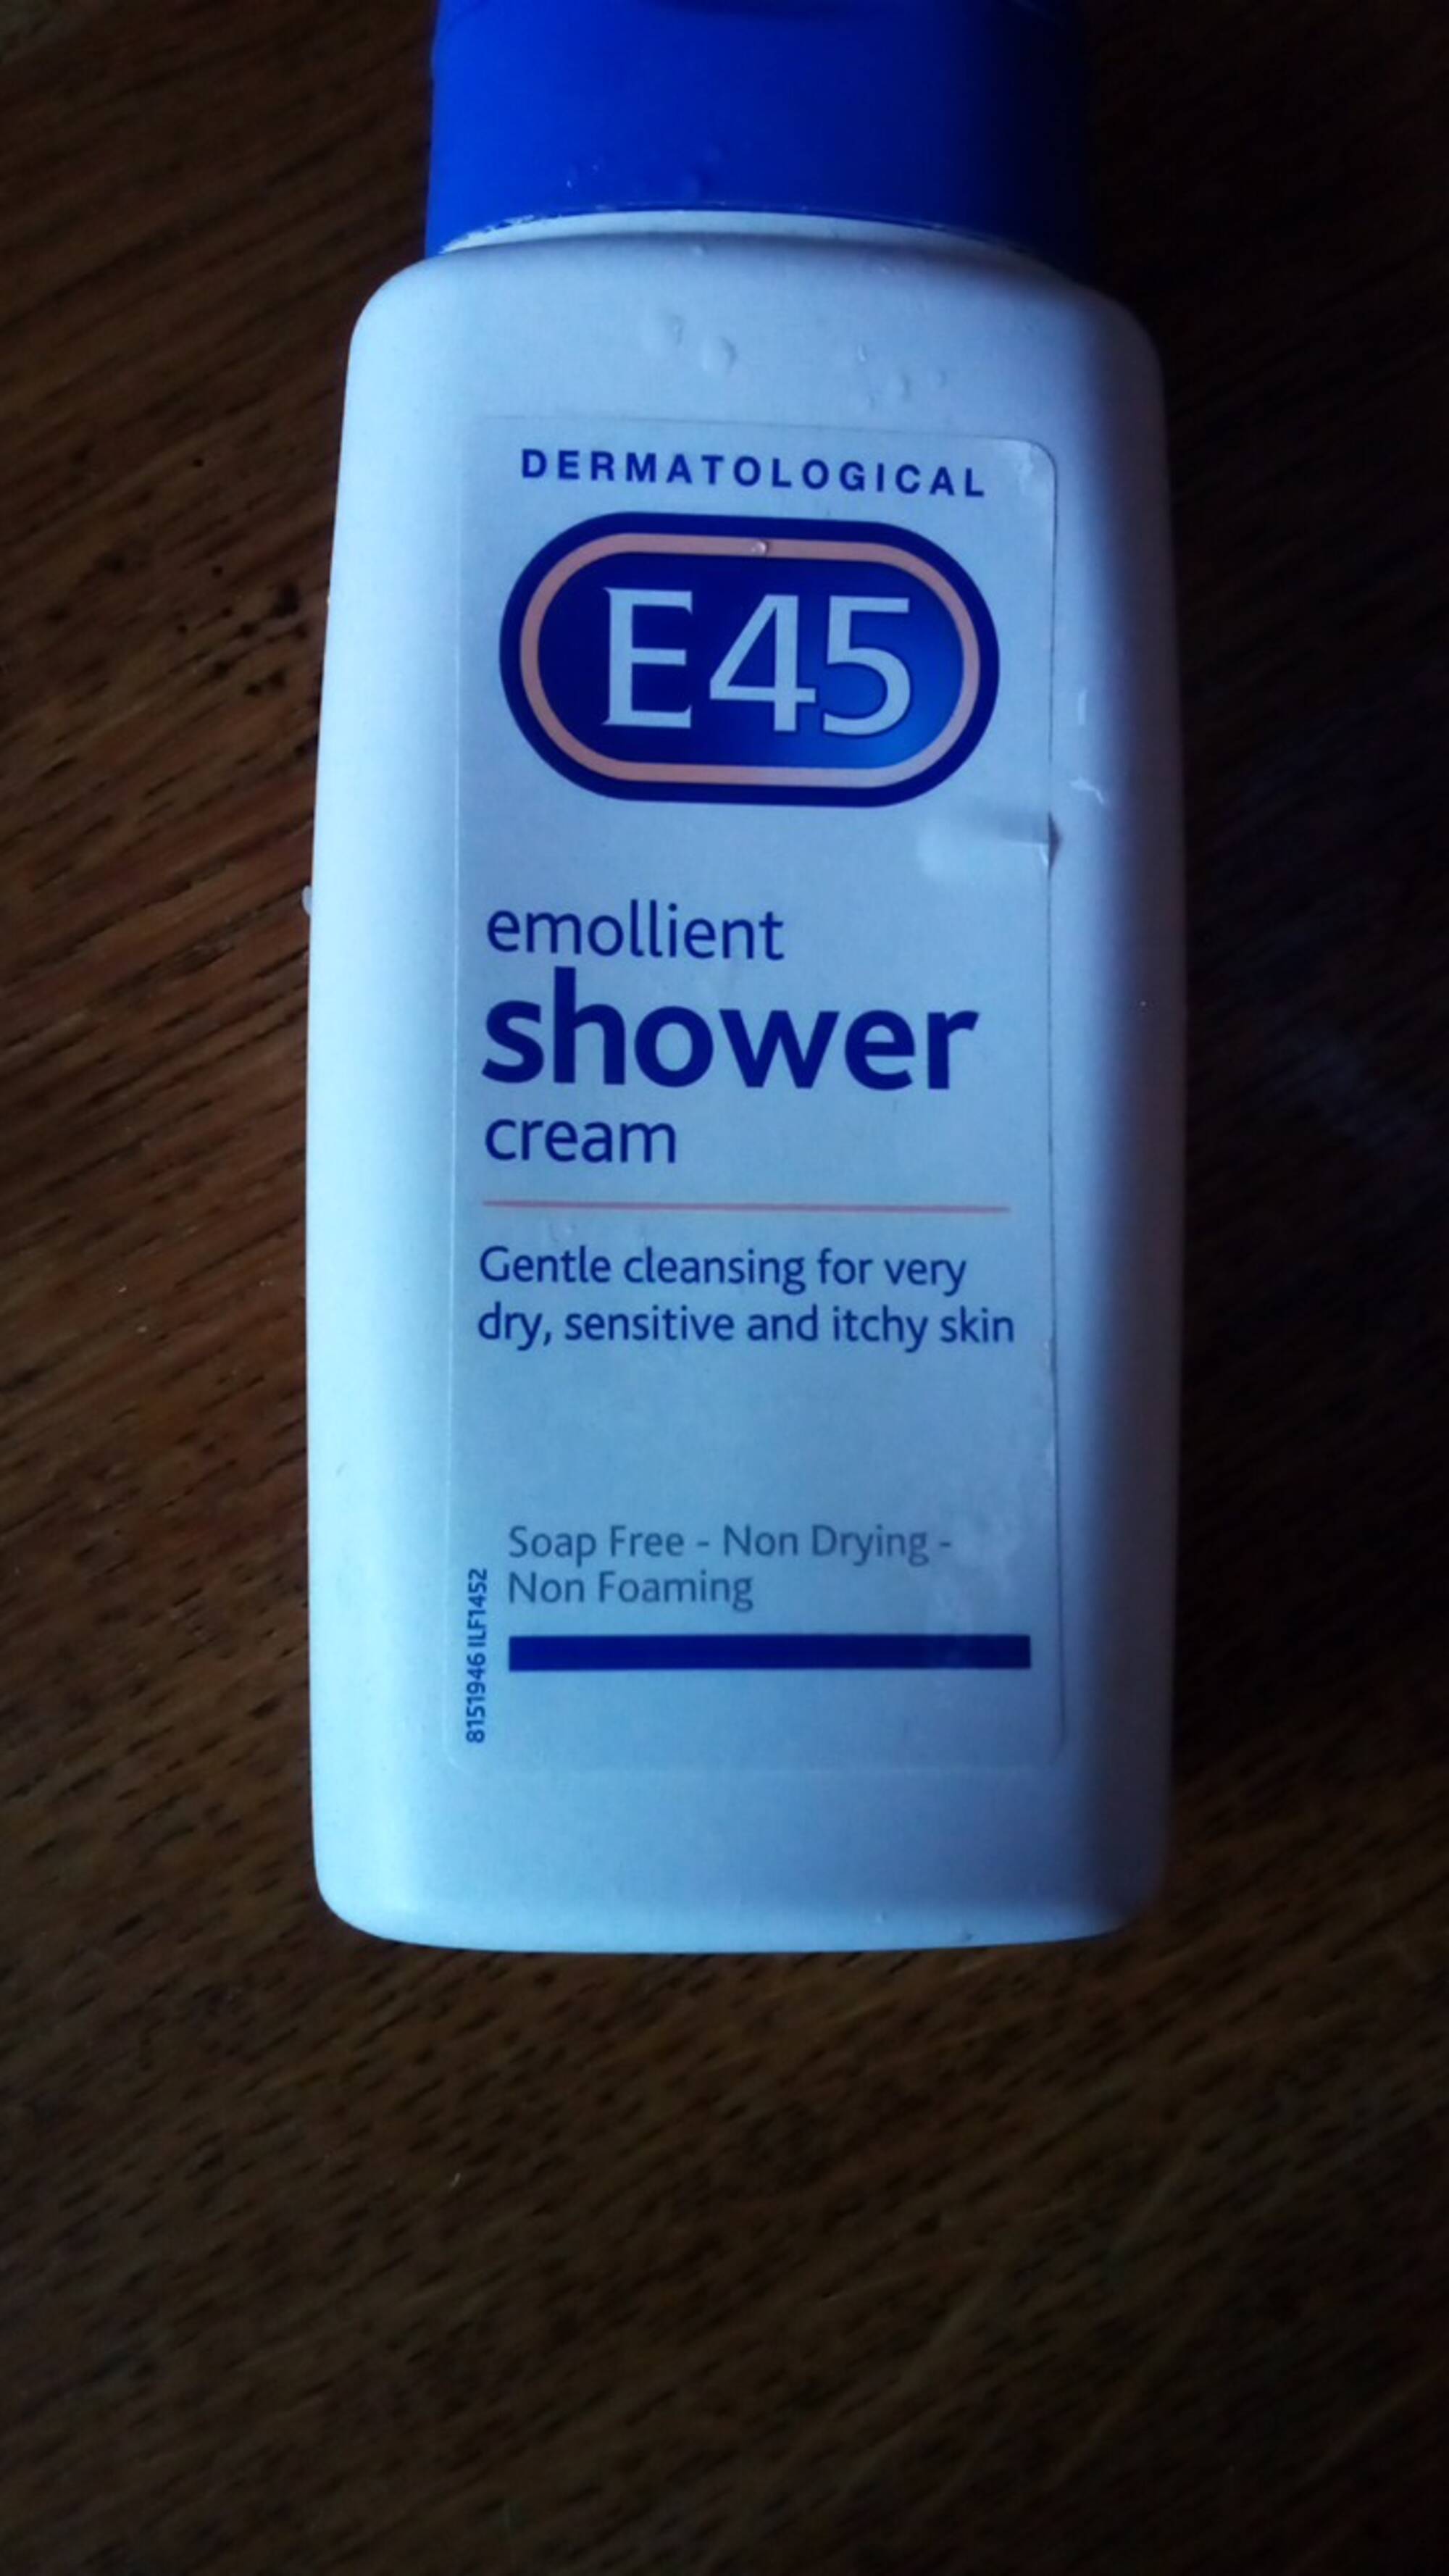 E45 - Emollient shower cream